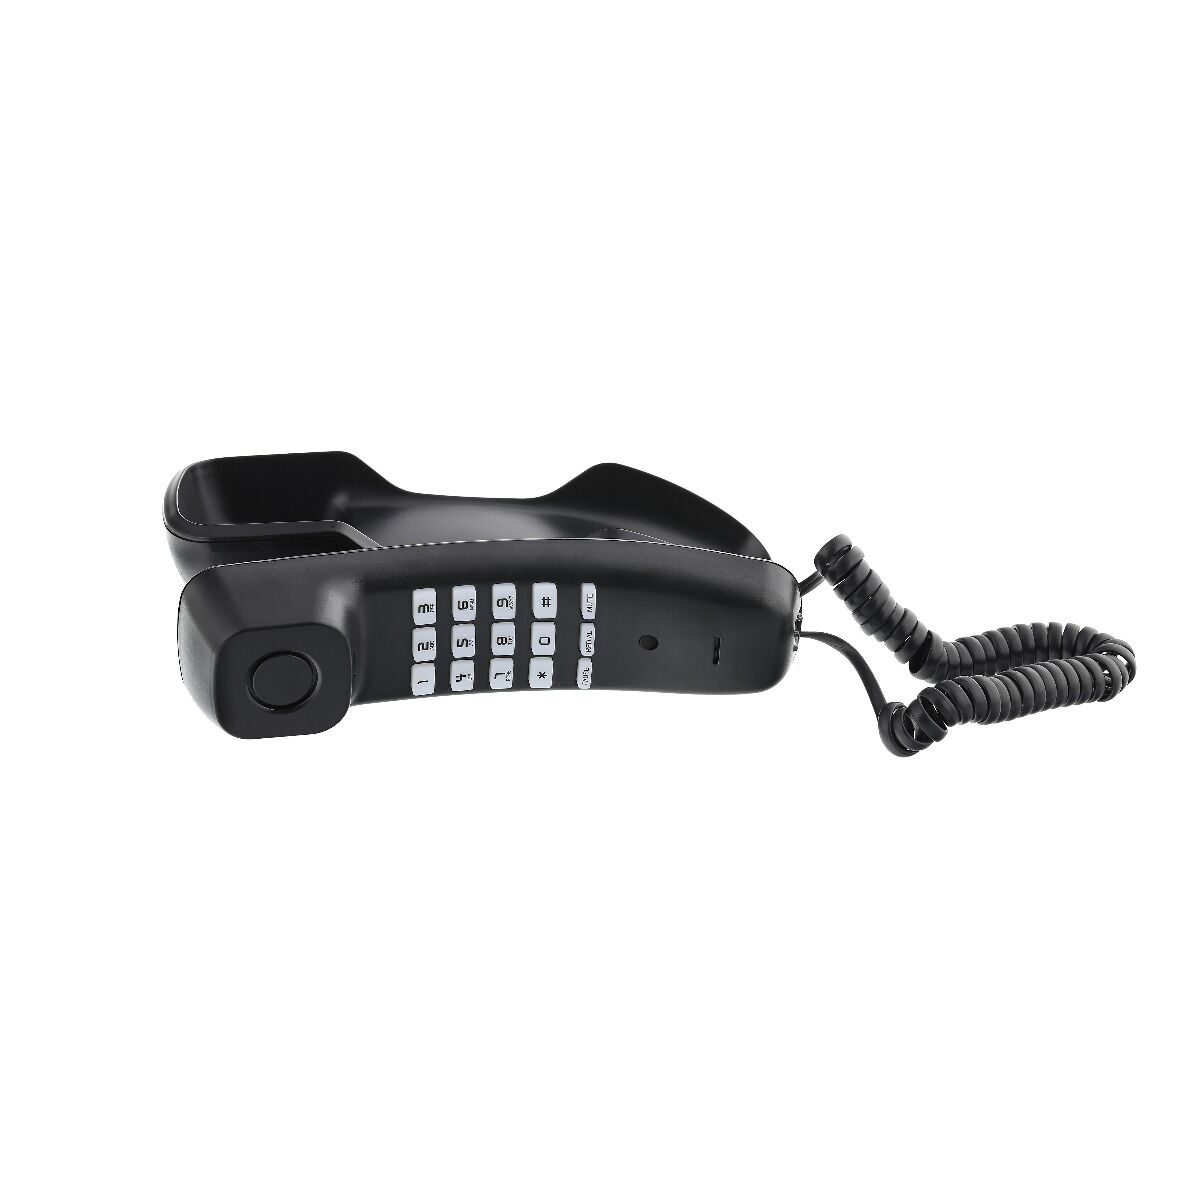 Telefon fix POP00002 Popik, Pauza, Oprire microfon, Reapelare, Notoficari luminoase, Negru